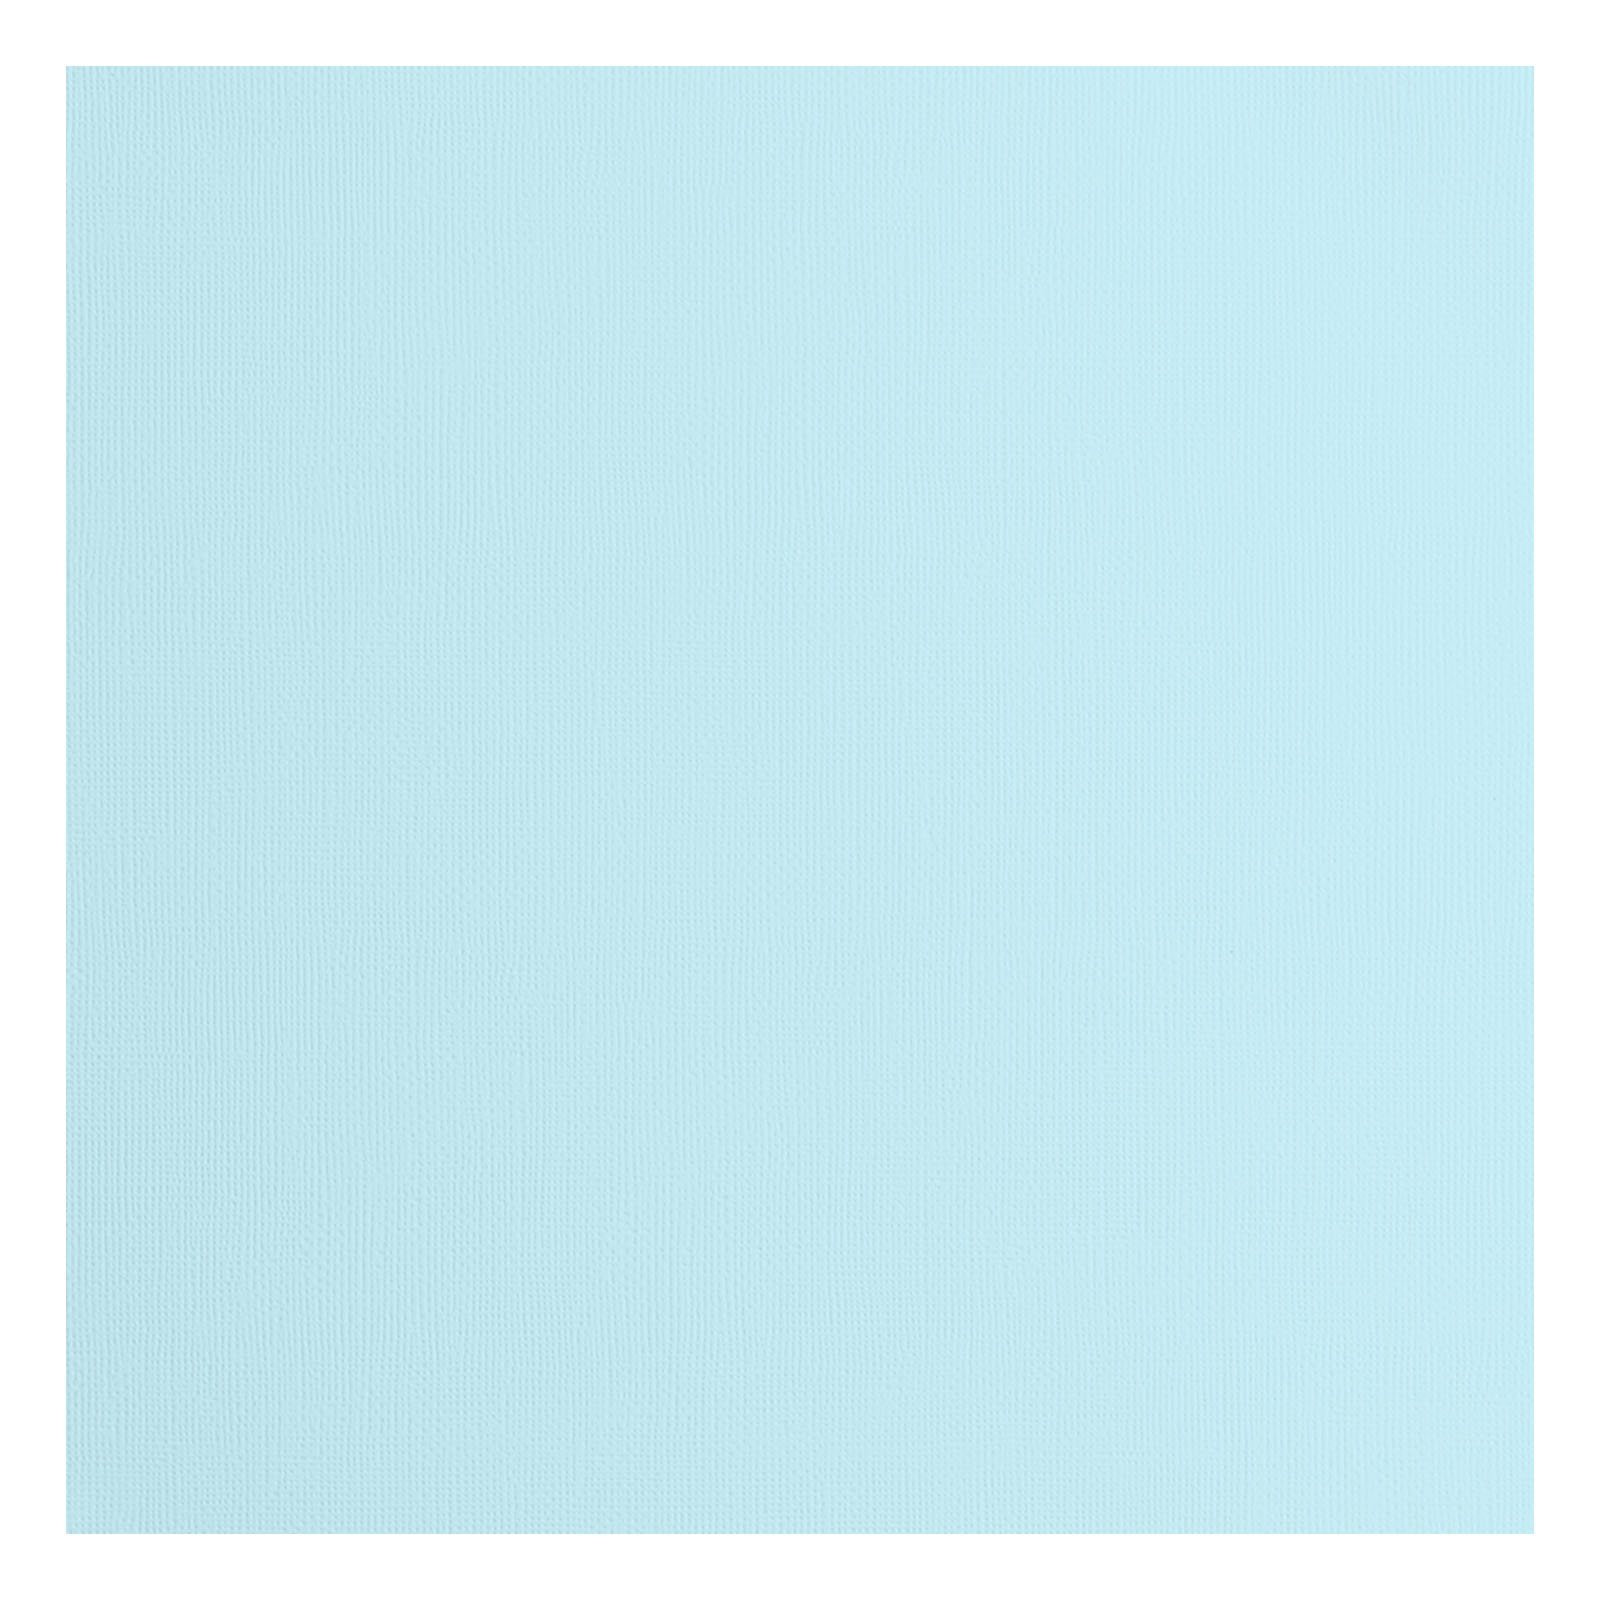 Florence • Cartoncino 216g Testurizzata Blu